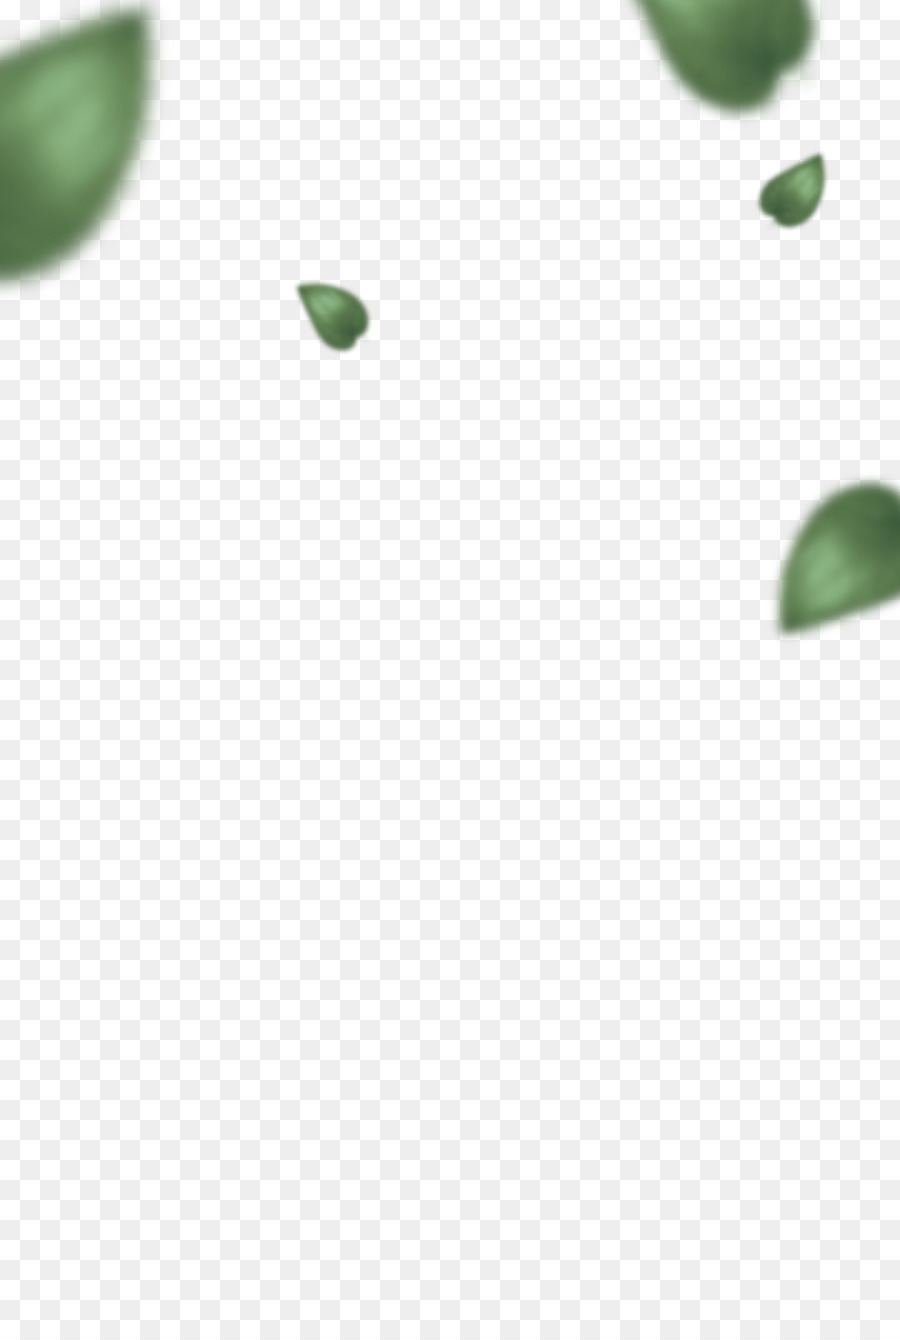 Grün Material Blatt-Designer - Frei schwebende grüne Blätter, dekorativen material